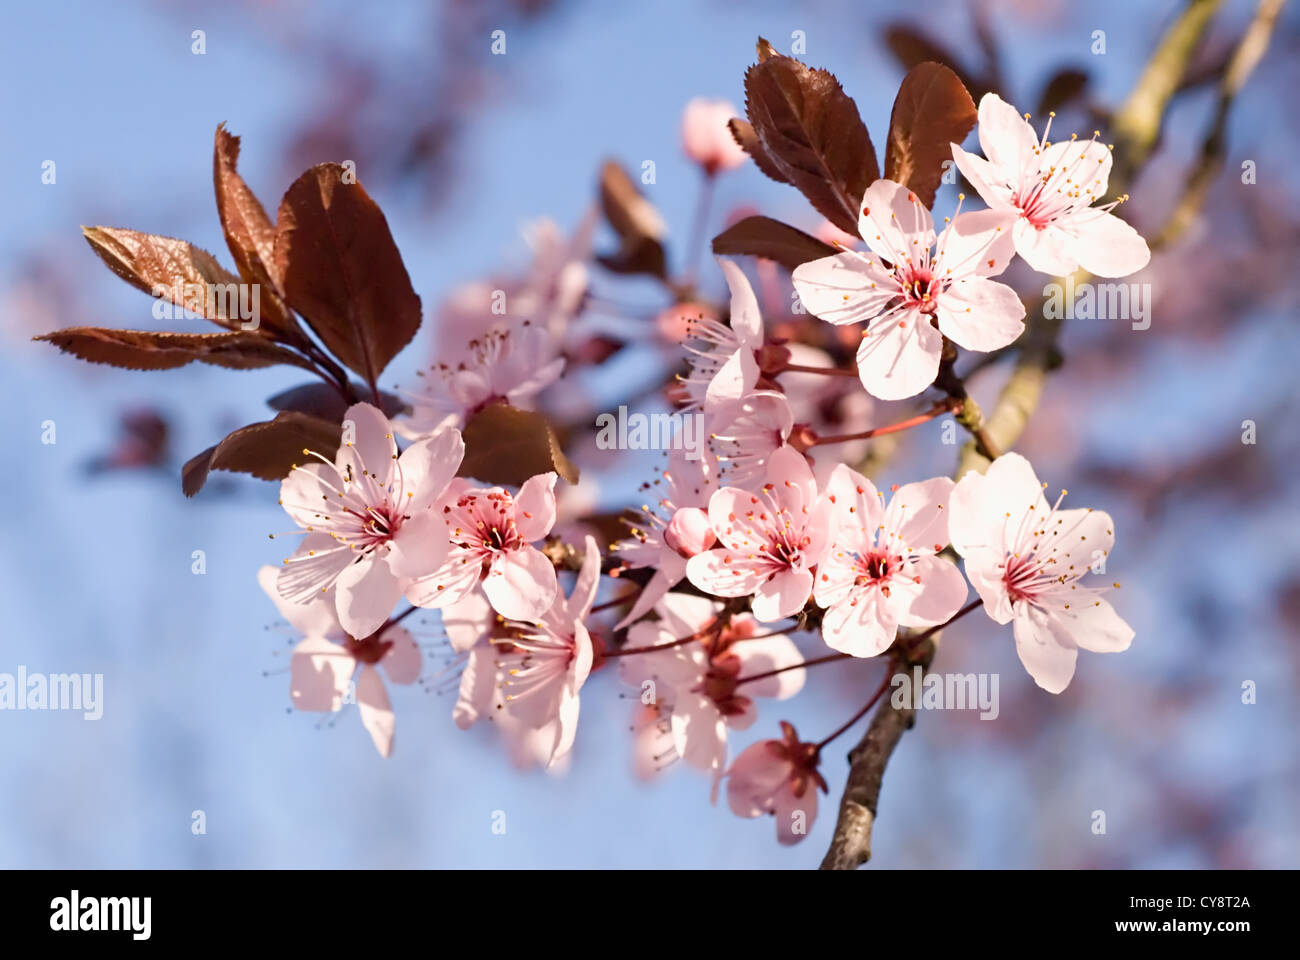 Prunus cerasifera 'Nigra' , Cherry plum, Abundant flowering blossom with small pink flowers. Stock Photo